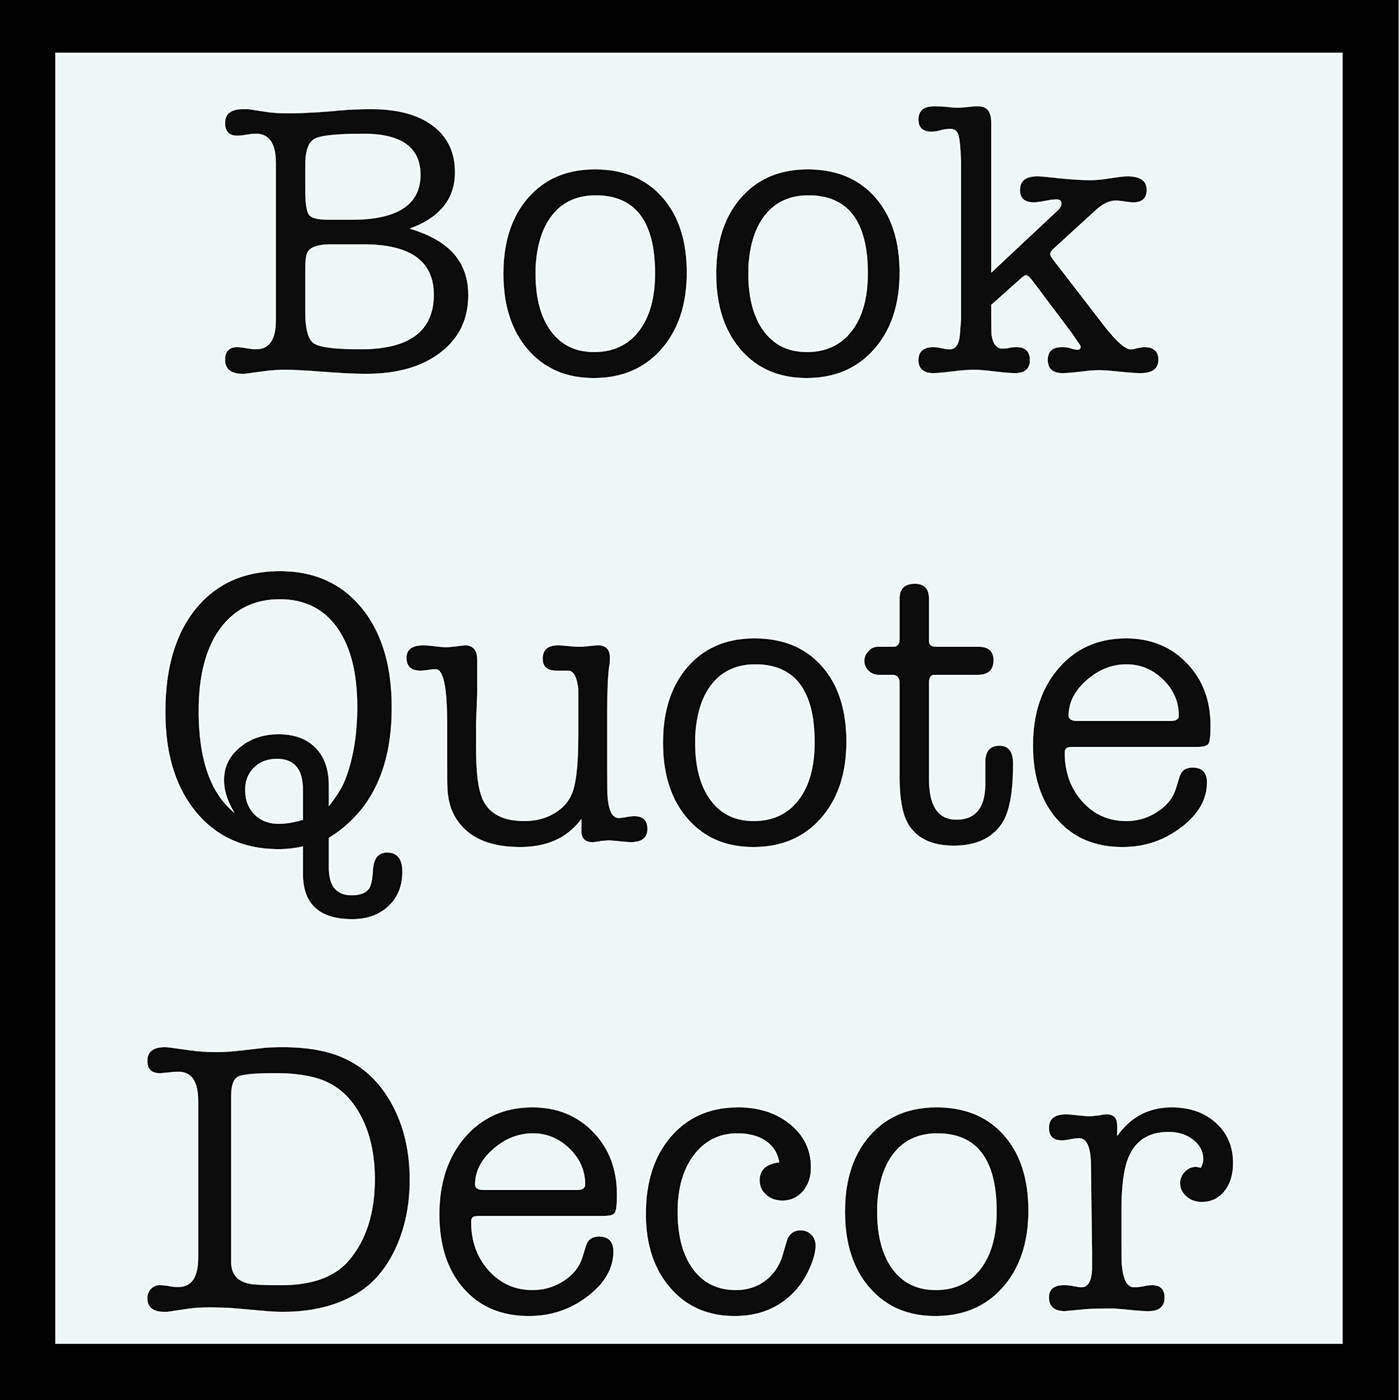 To Kill a Mockingbird Prints, Harper Lee Book Art, Set of 2 art prints, Opening & Closing Lines Black and White Wall Art Decor Unframed - BookQuoteDecor